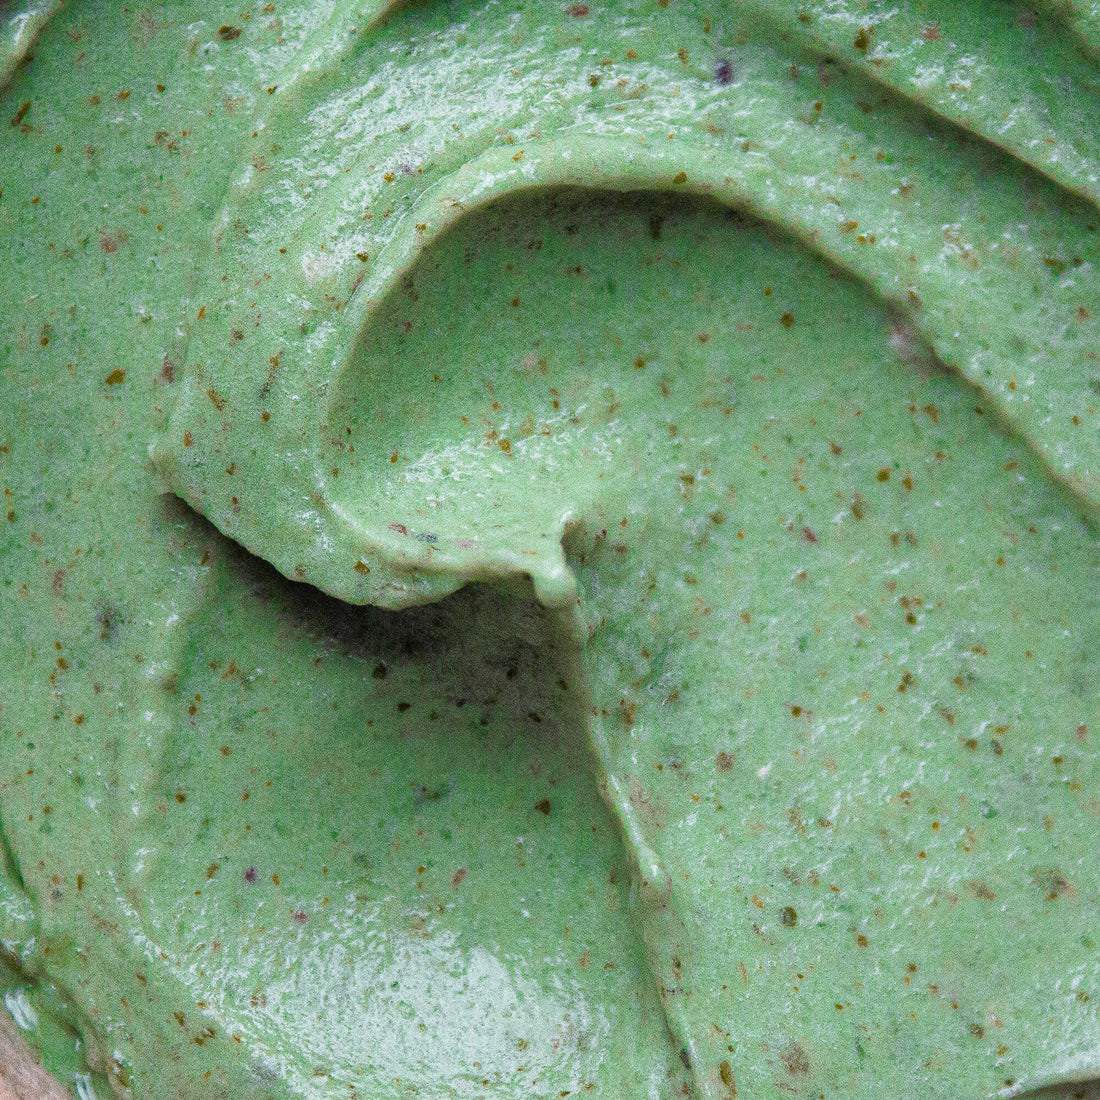 Green blender smoothie